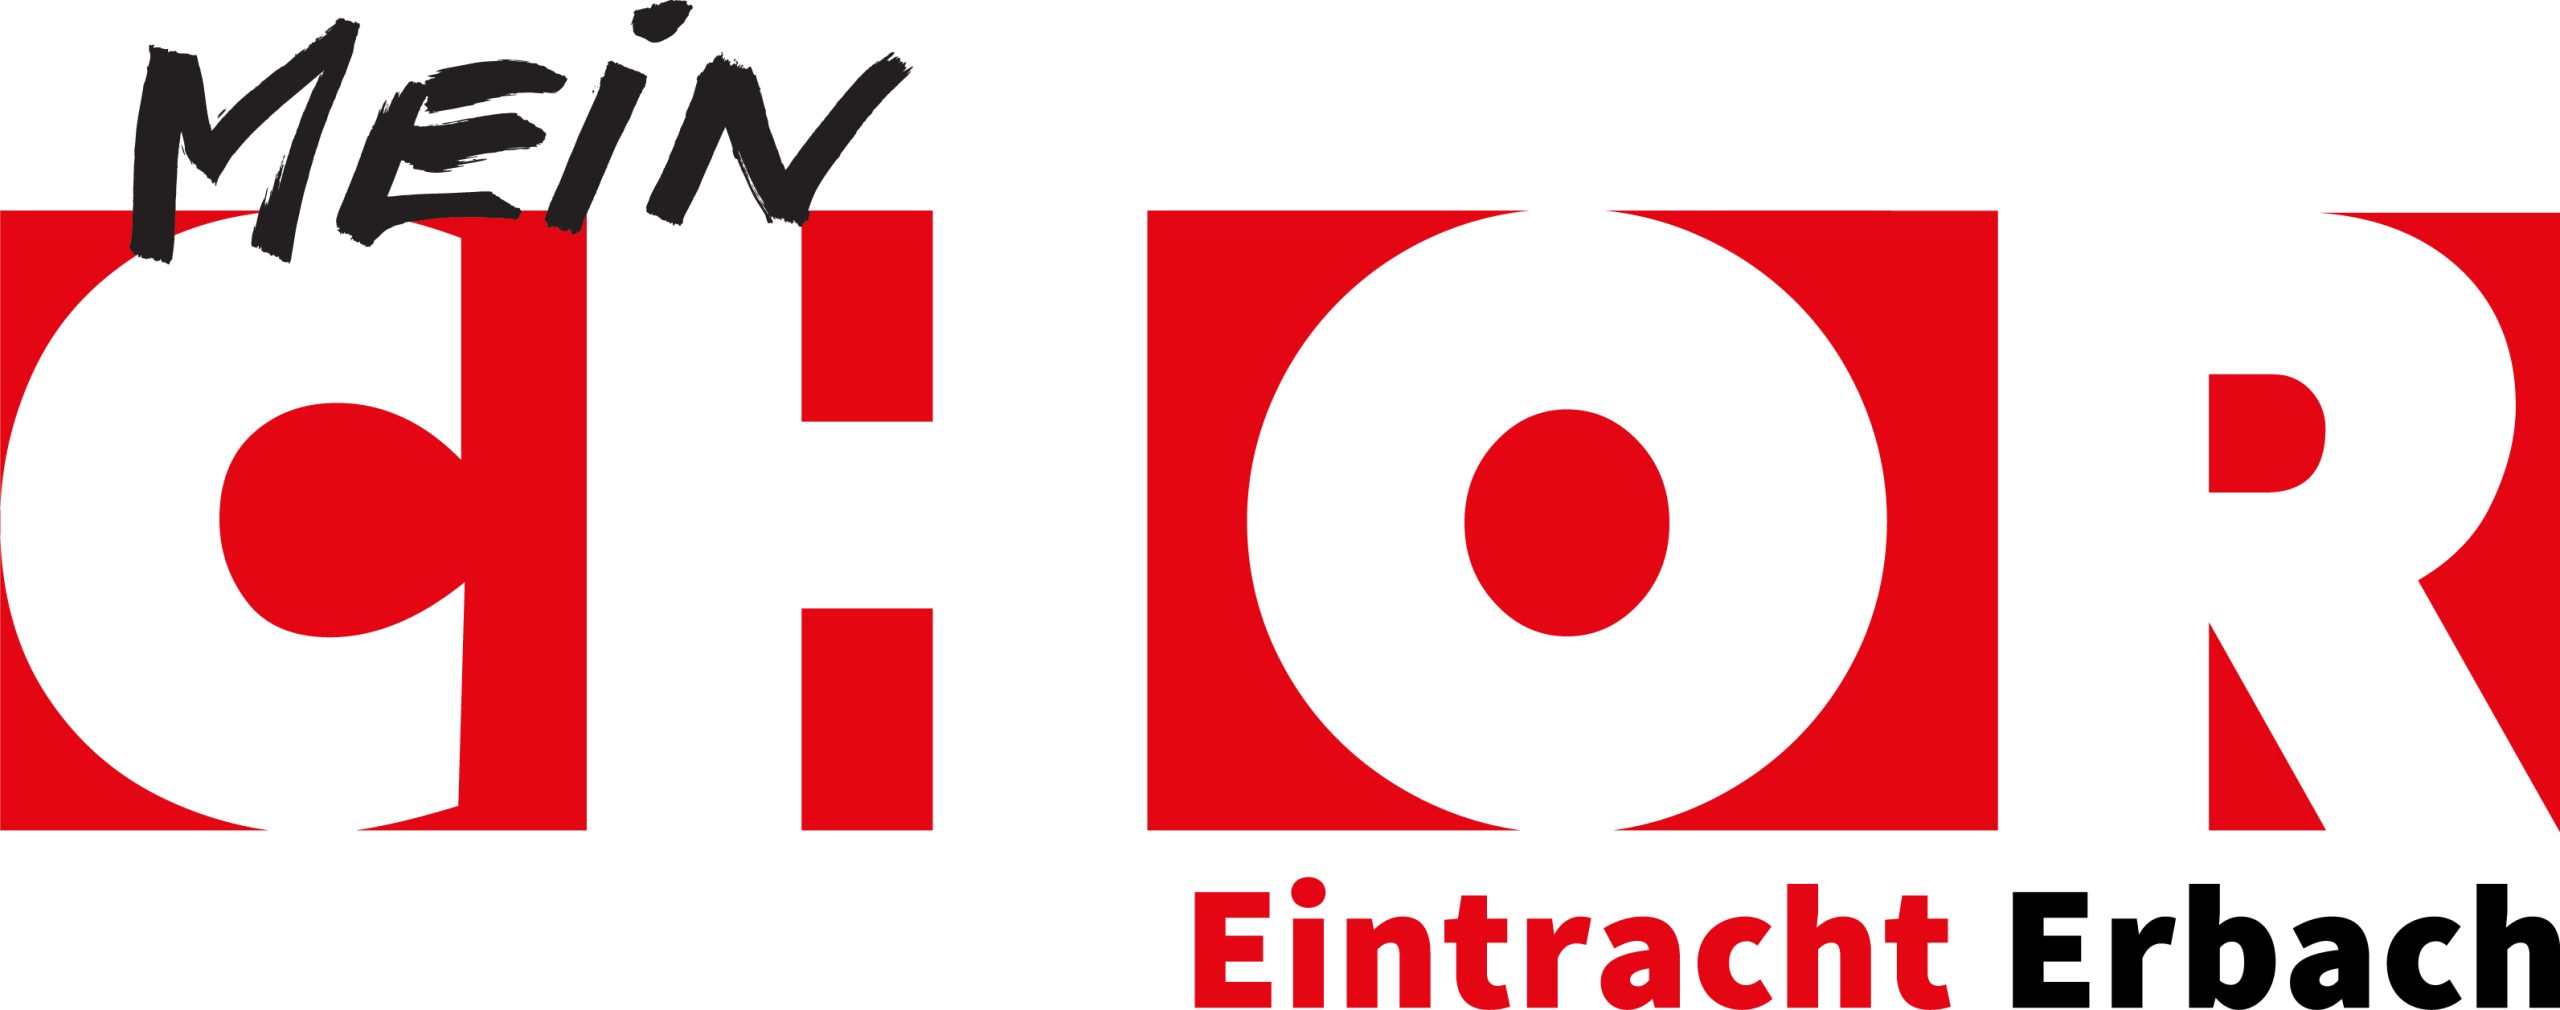 MGV Eintracht Erbach